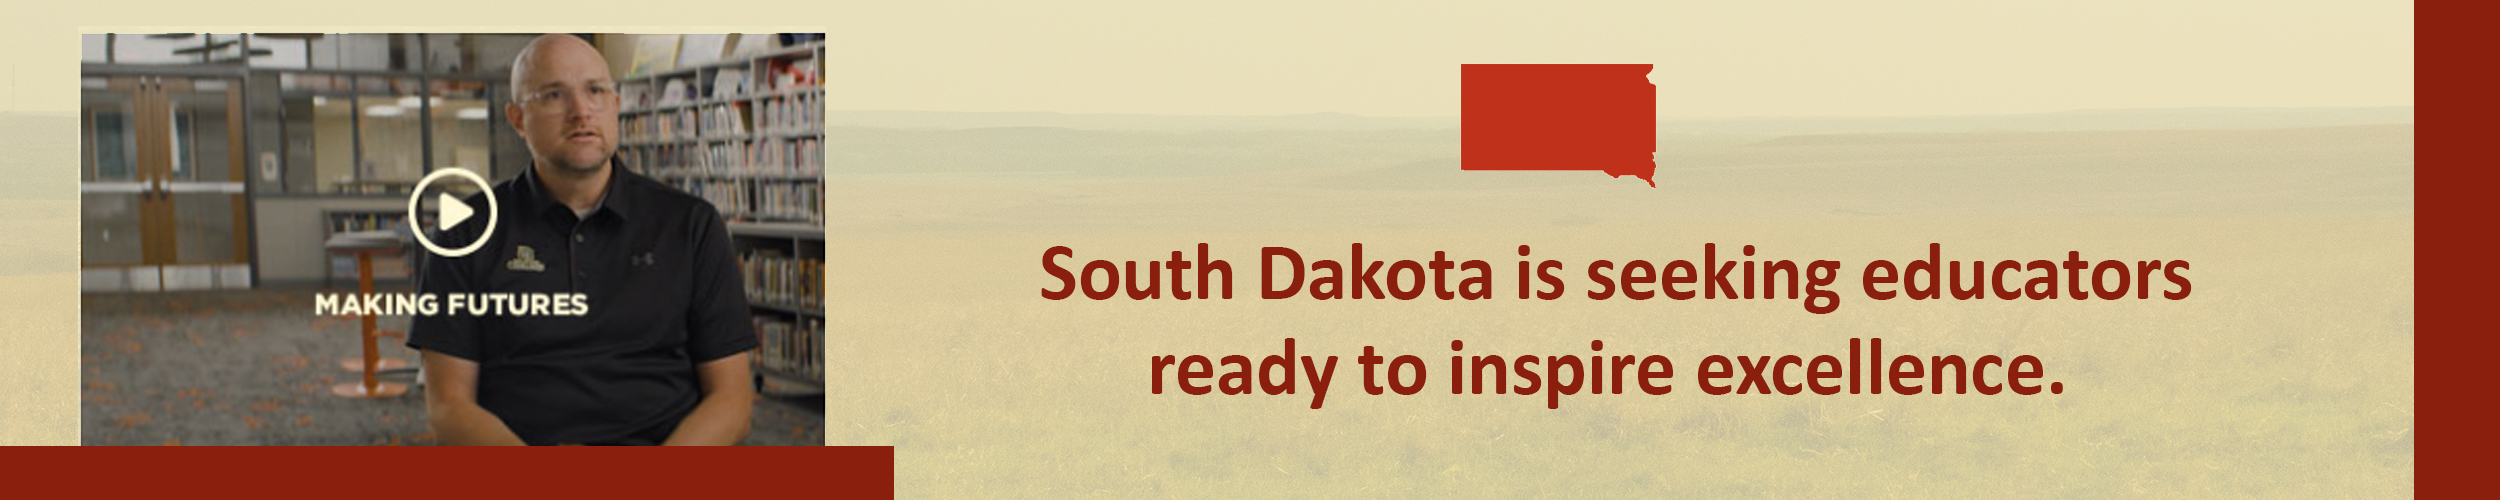 South Dakota is seeking educators ready to inspire excellence. Link.